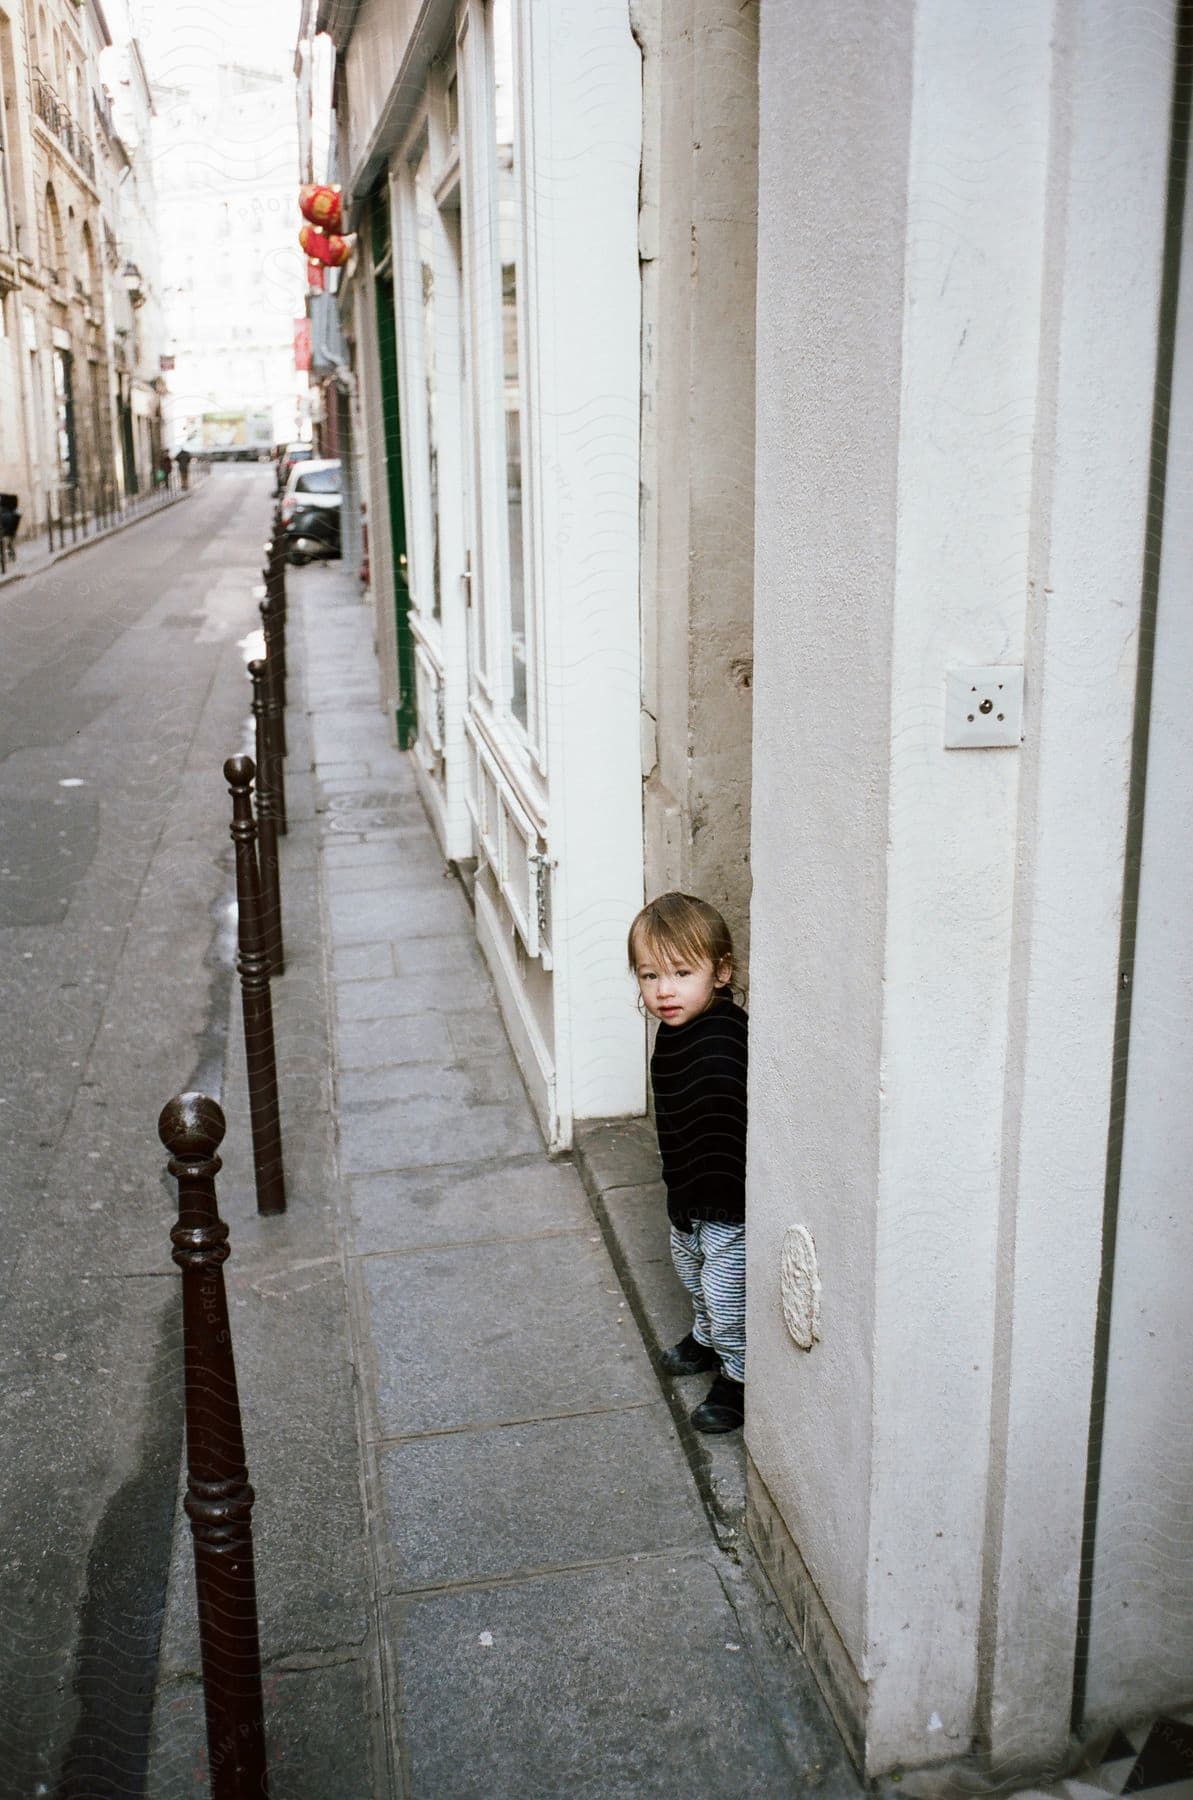 Buildings line a narrow street as a little boy stands in a doorway near the sidewalk